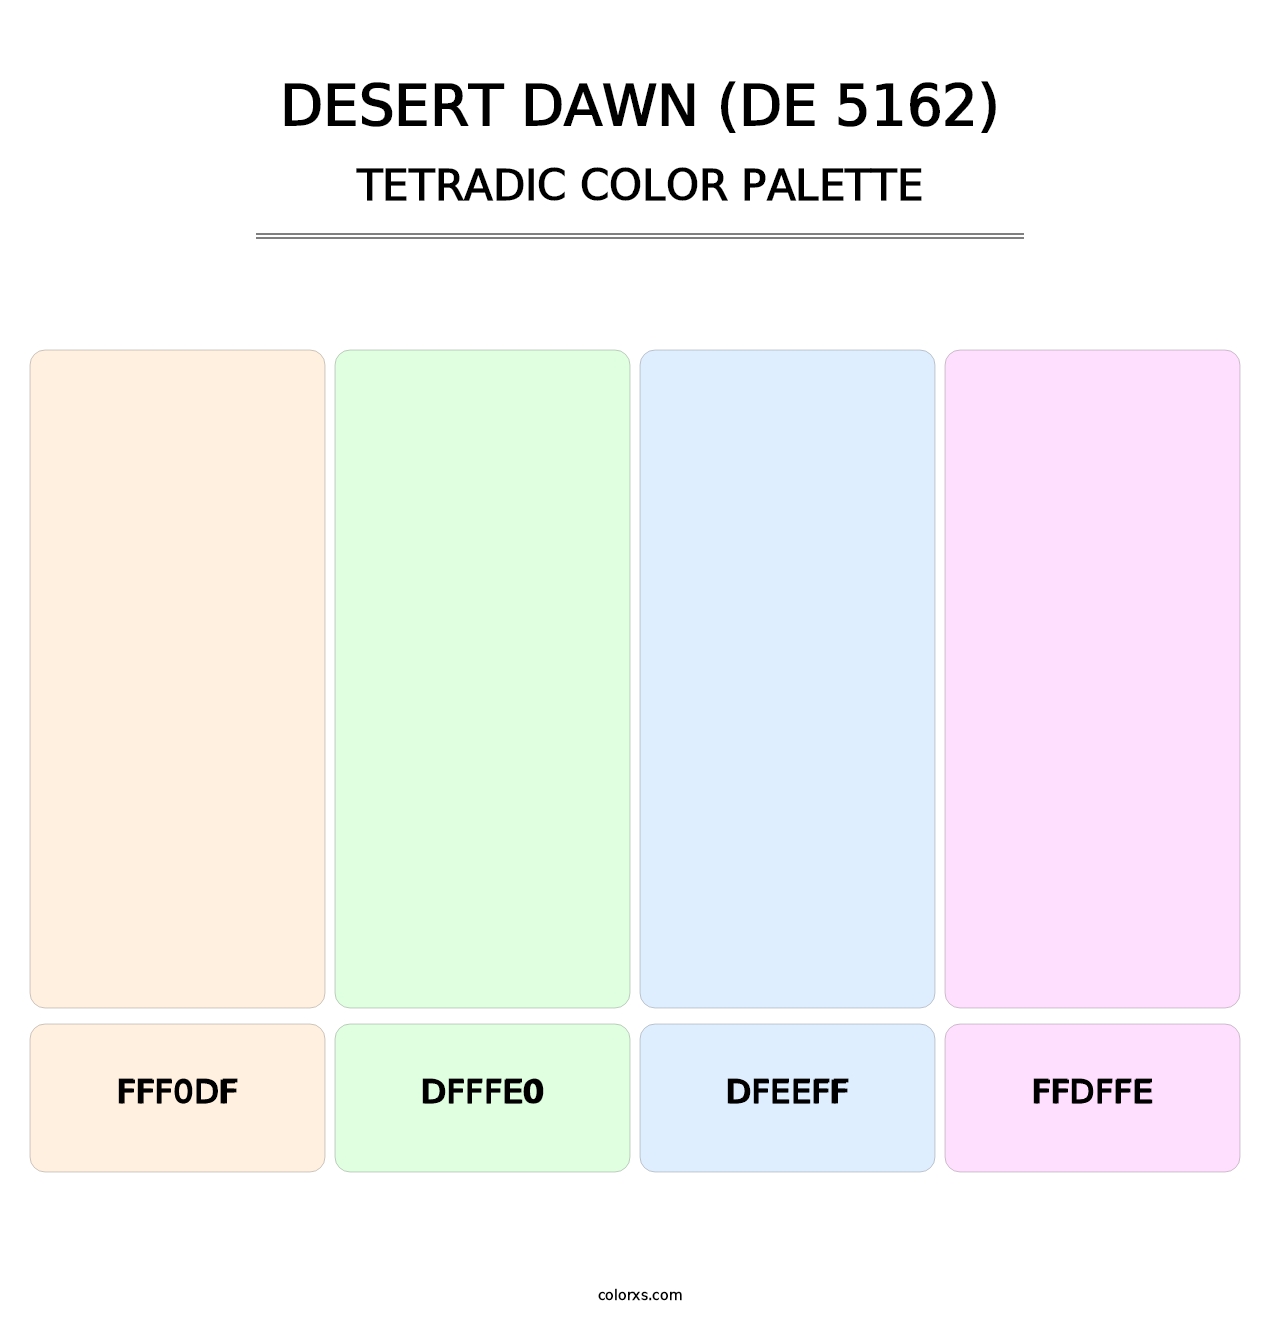 Desert Dawn (DE 5162) - Tetradic Color Palette